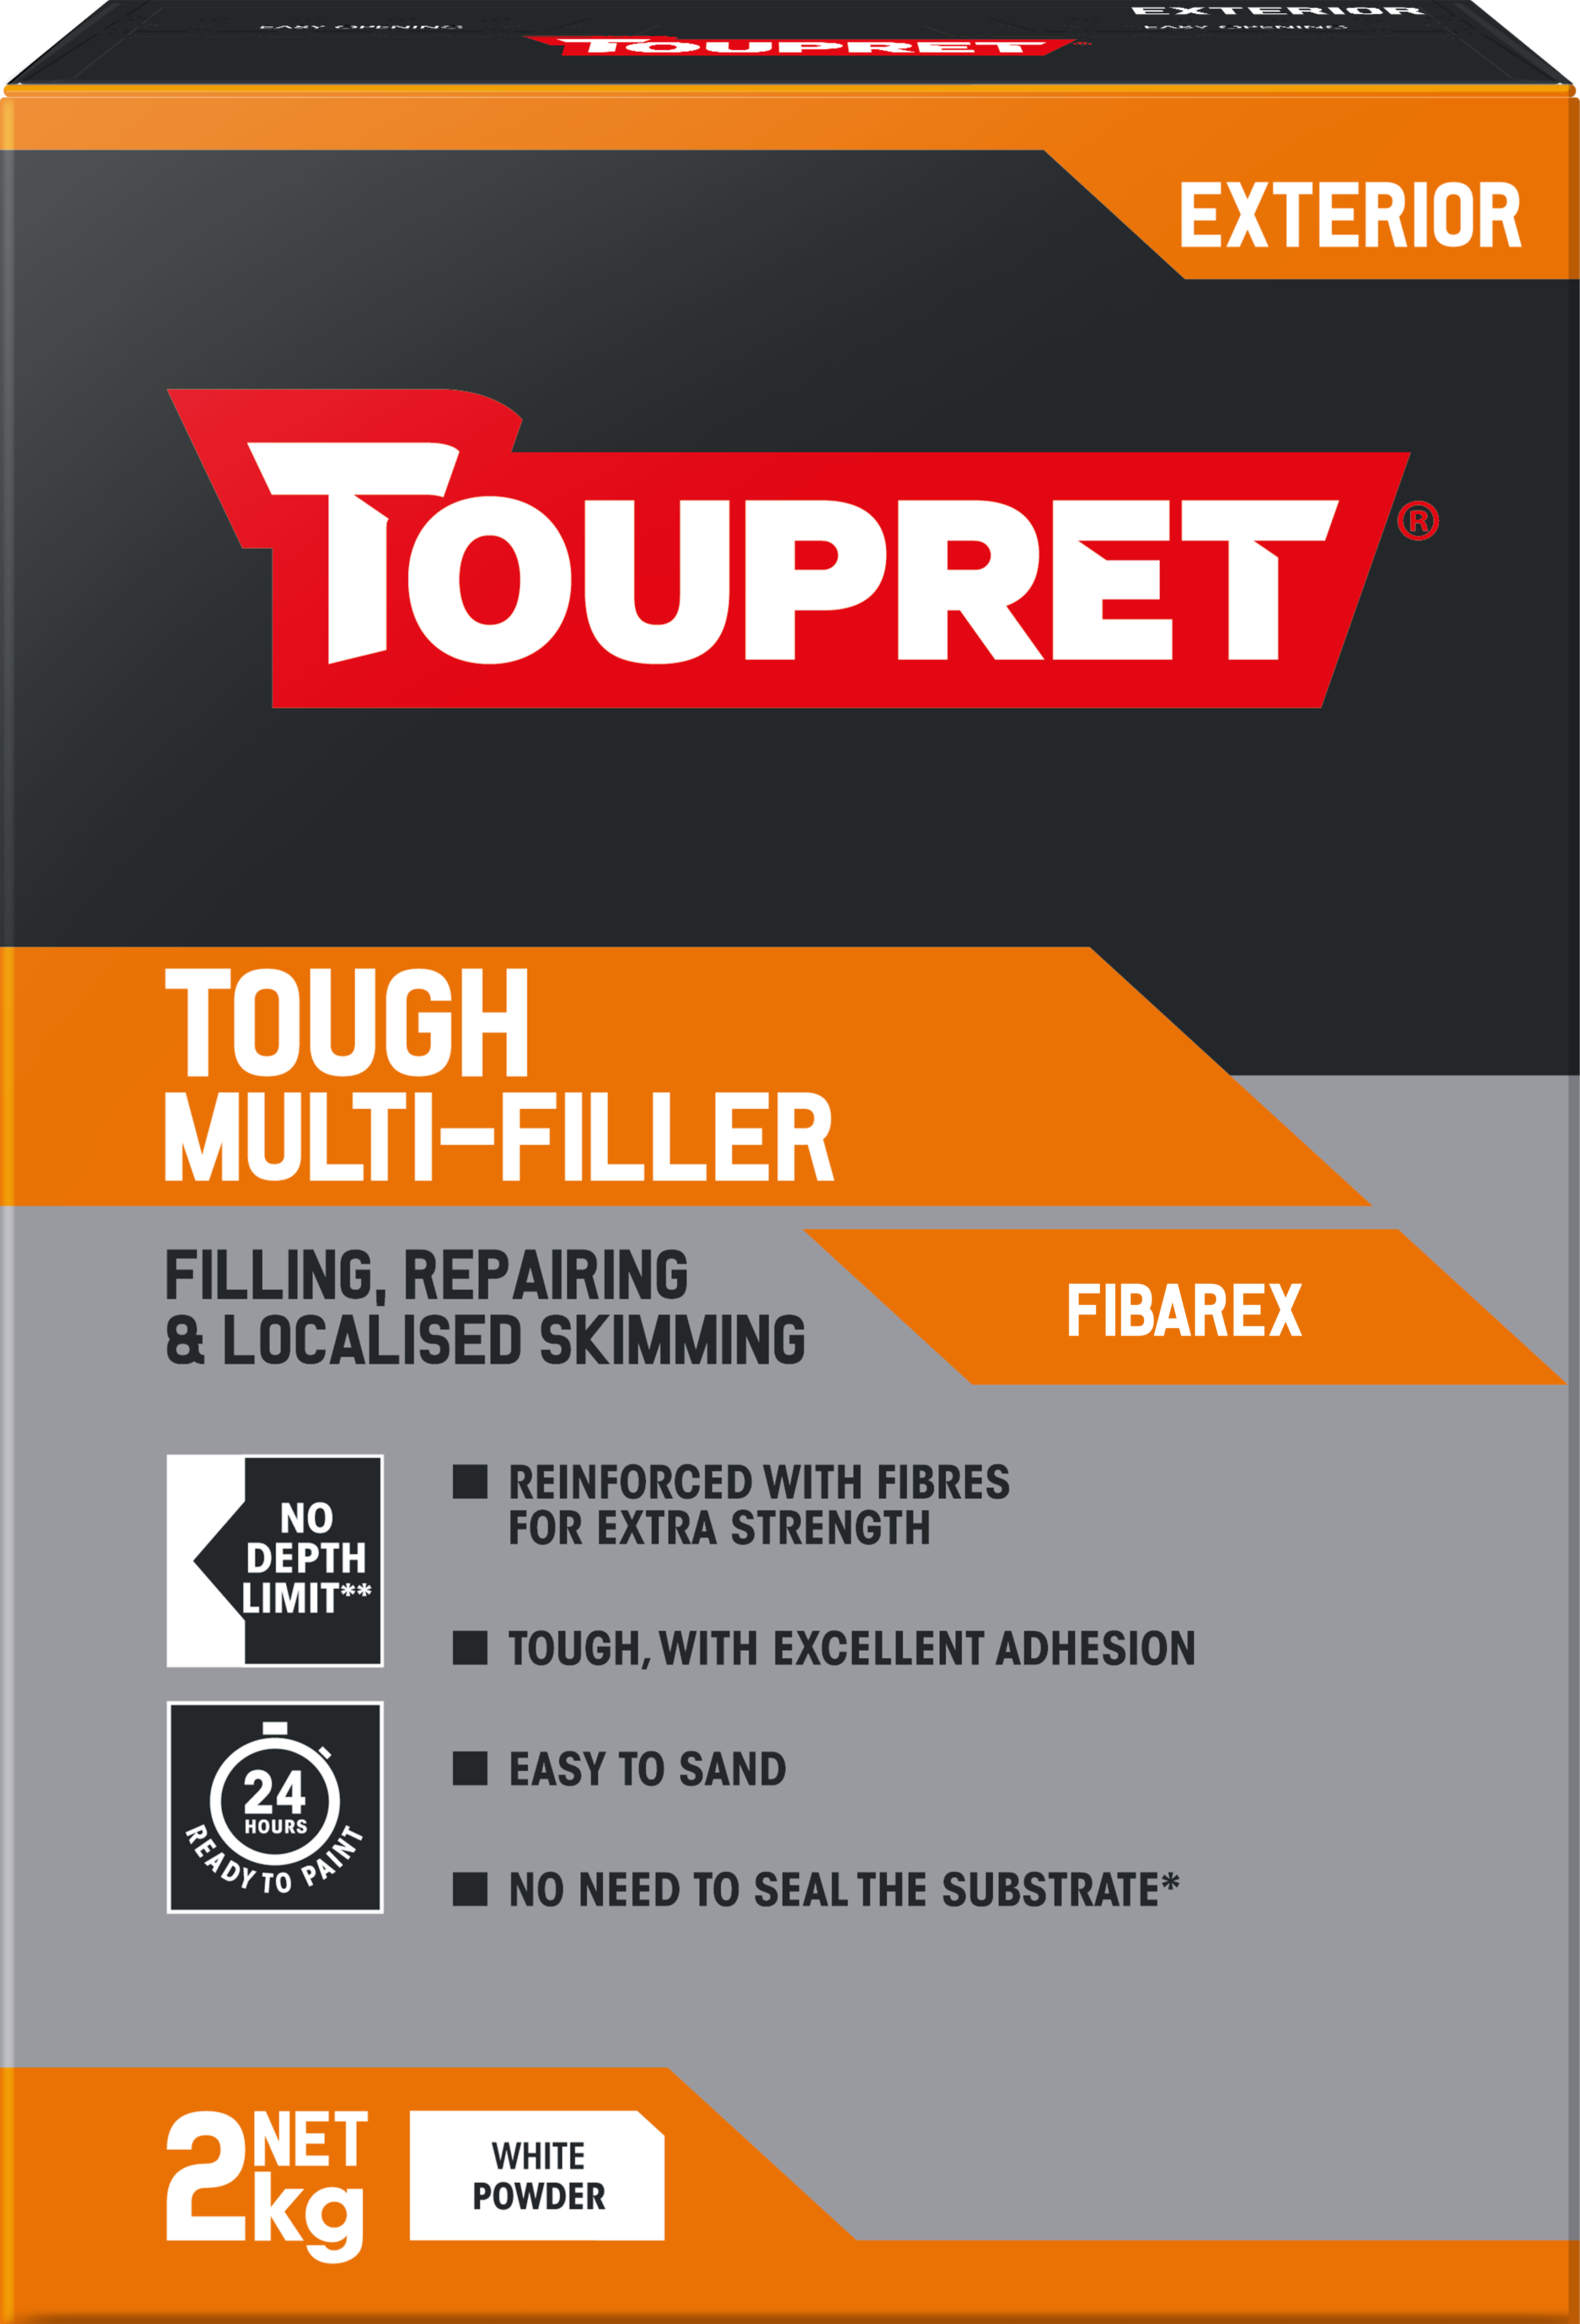 Toupret Tough Multi-Filler (Fibarex) 2kg